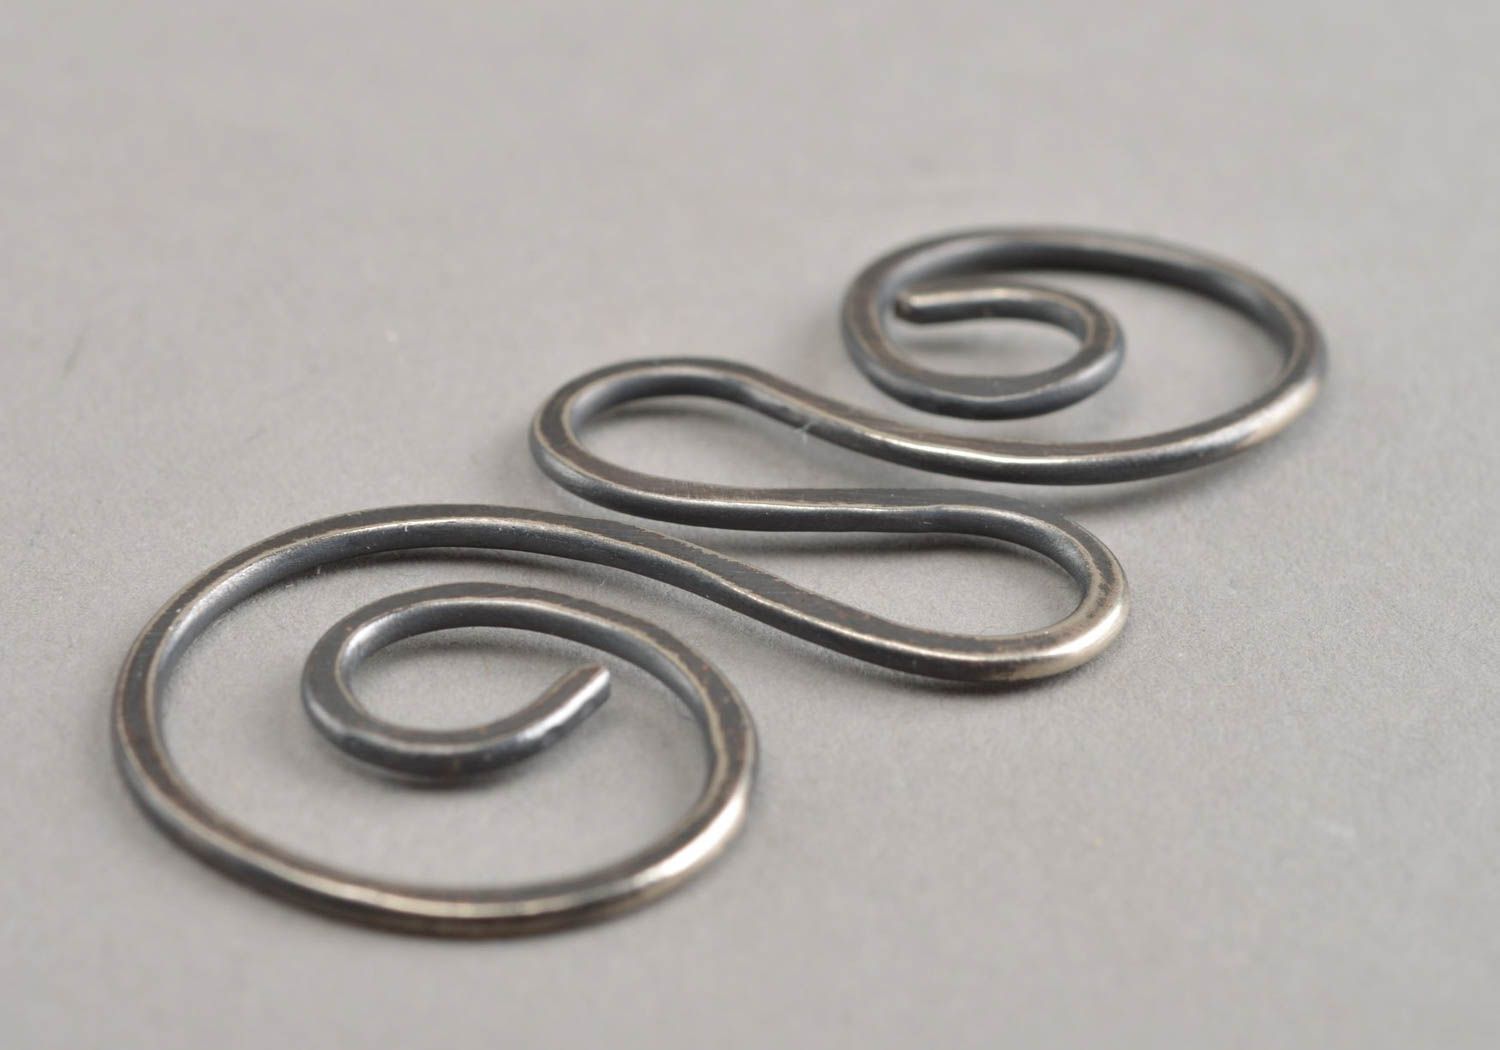 Beautiful handmade metal pendant artisan jewelry designs cool jewelry ideas photo 3